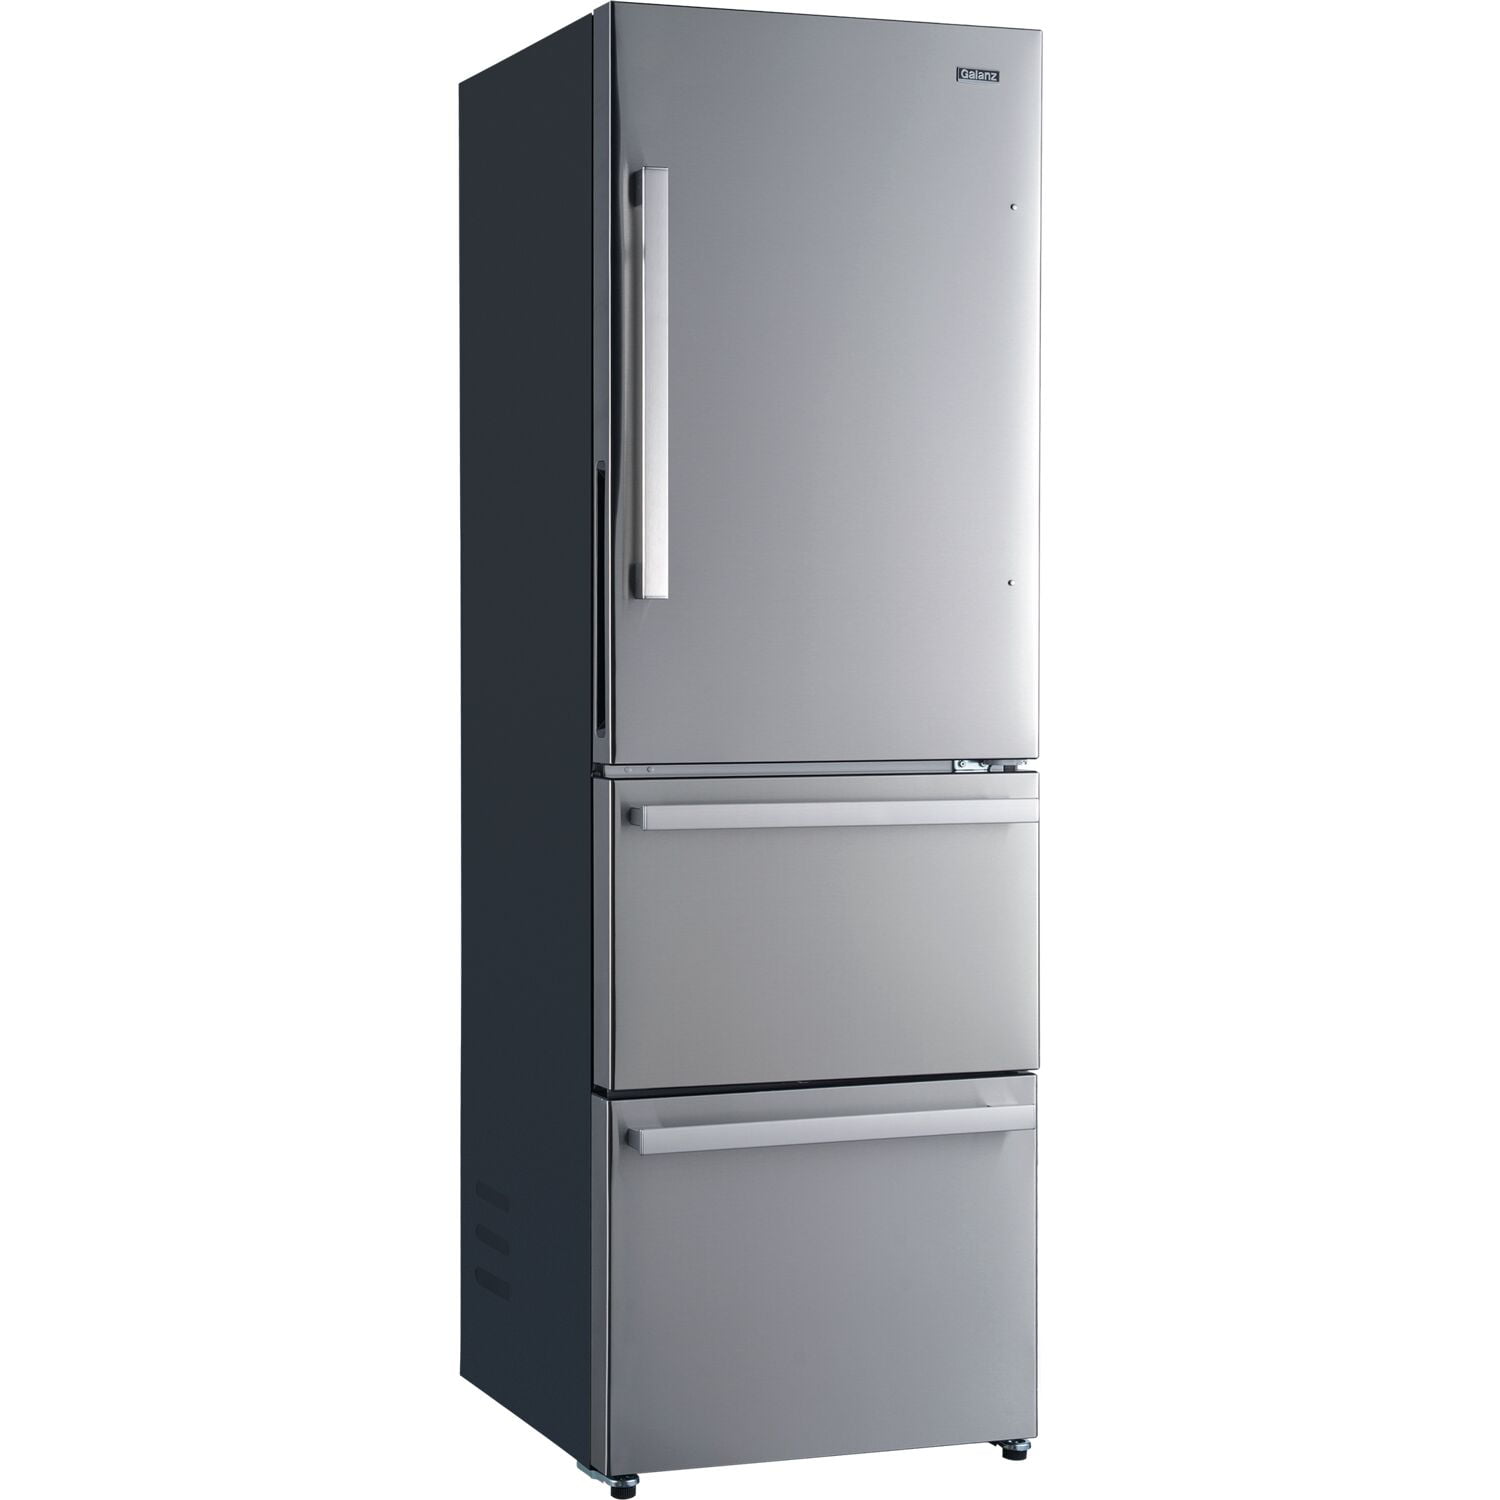 Galanz 12.4 cu. ft. 3-Door Bottom Mount Refrigerator in Stainless Steel Finish